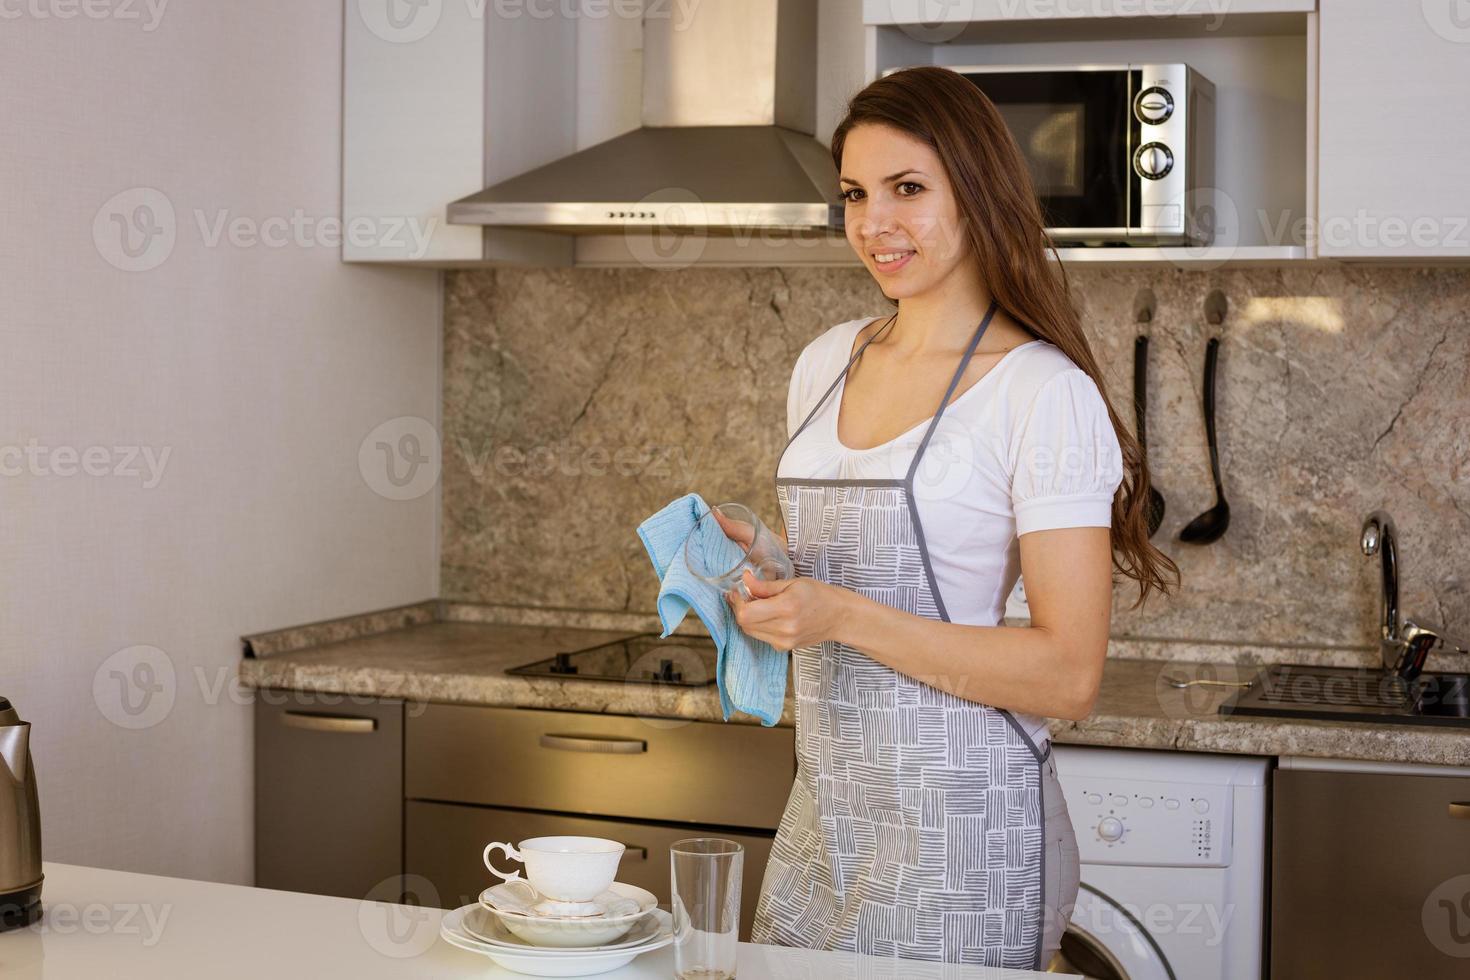 una giovane donna in una cucina moderna pulisce una tazza di vetro foto